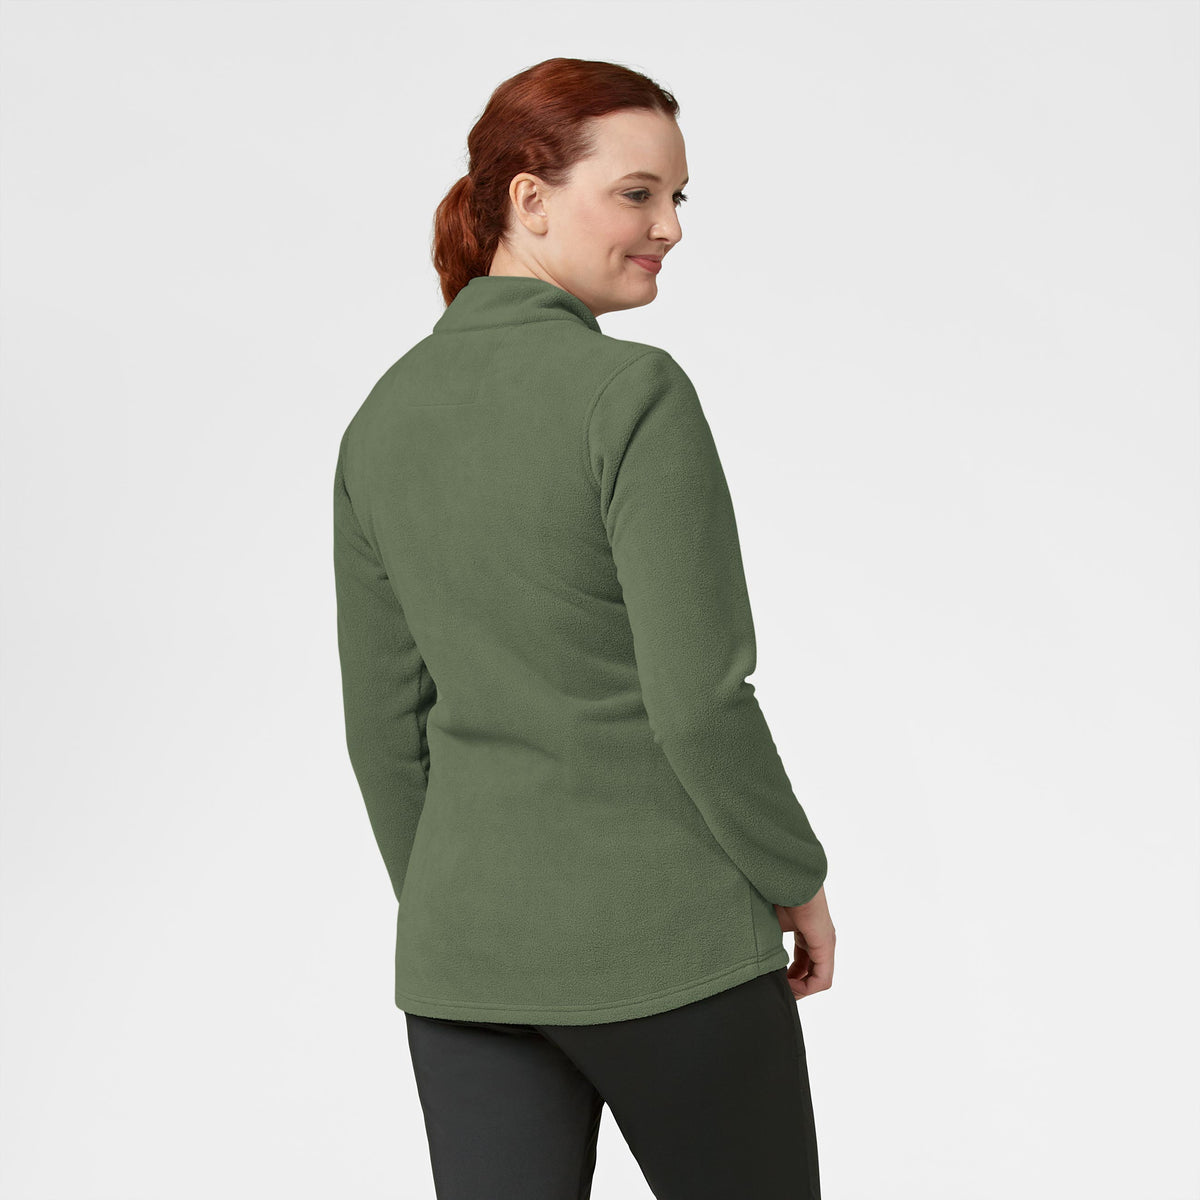 Slate Women's Micro Fleece Zip Jacket Olive back view